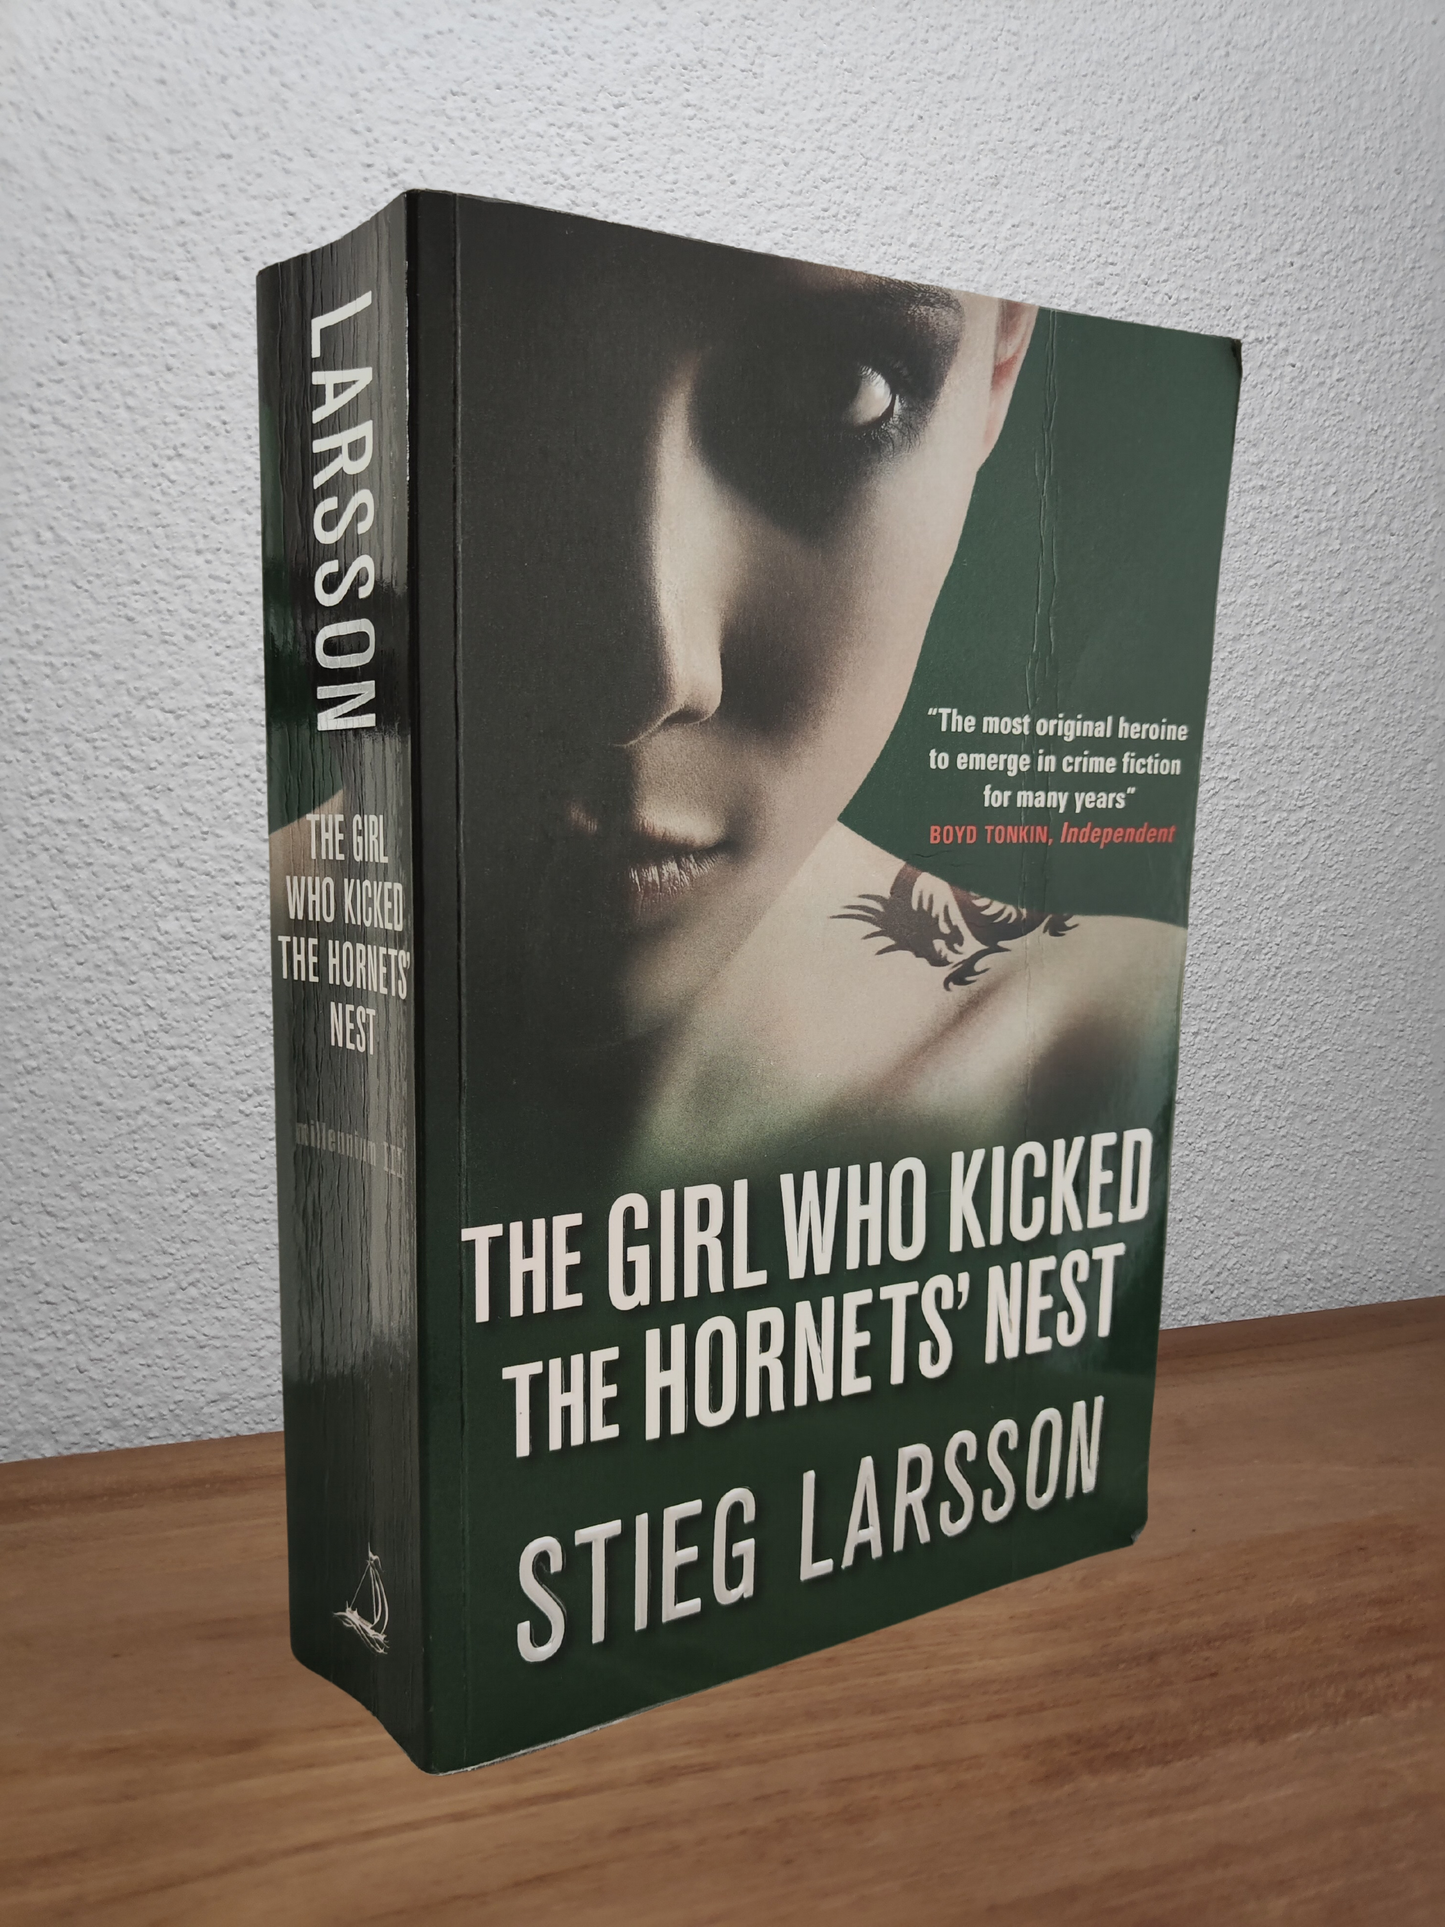 Stieg Larsson - The Girl Who Kicked the Hornet's Nest (Millennium #3)